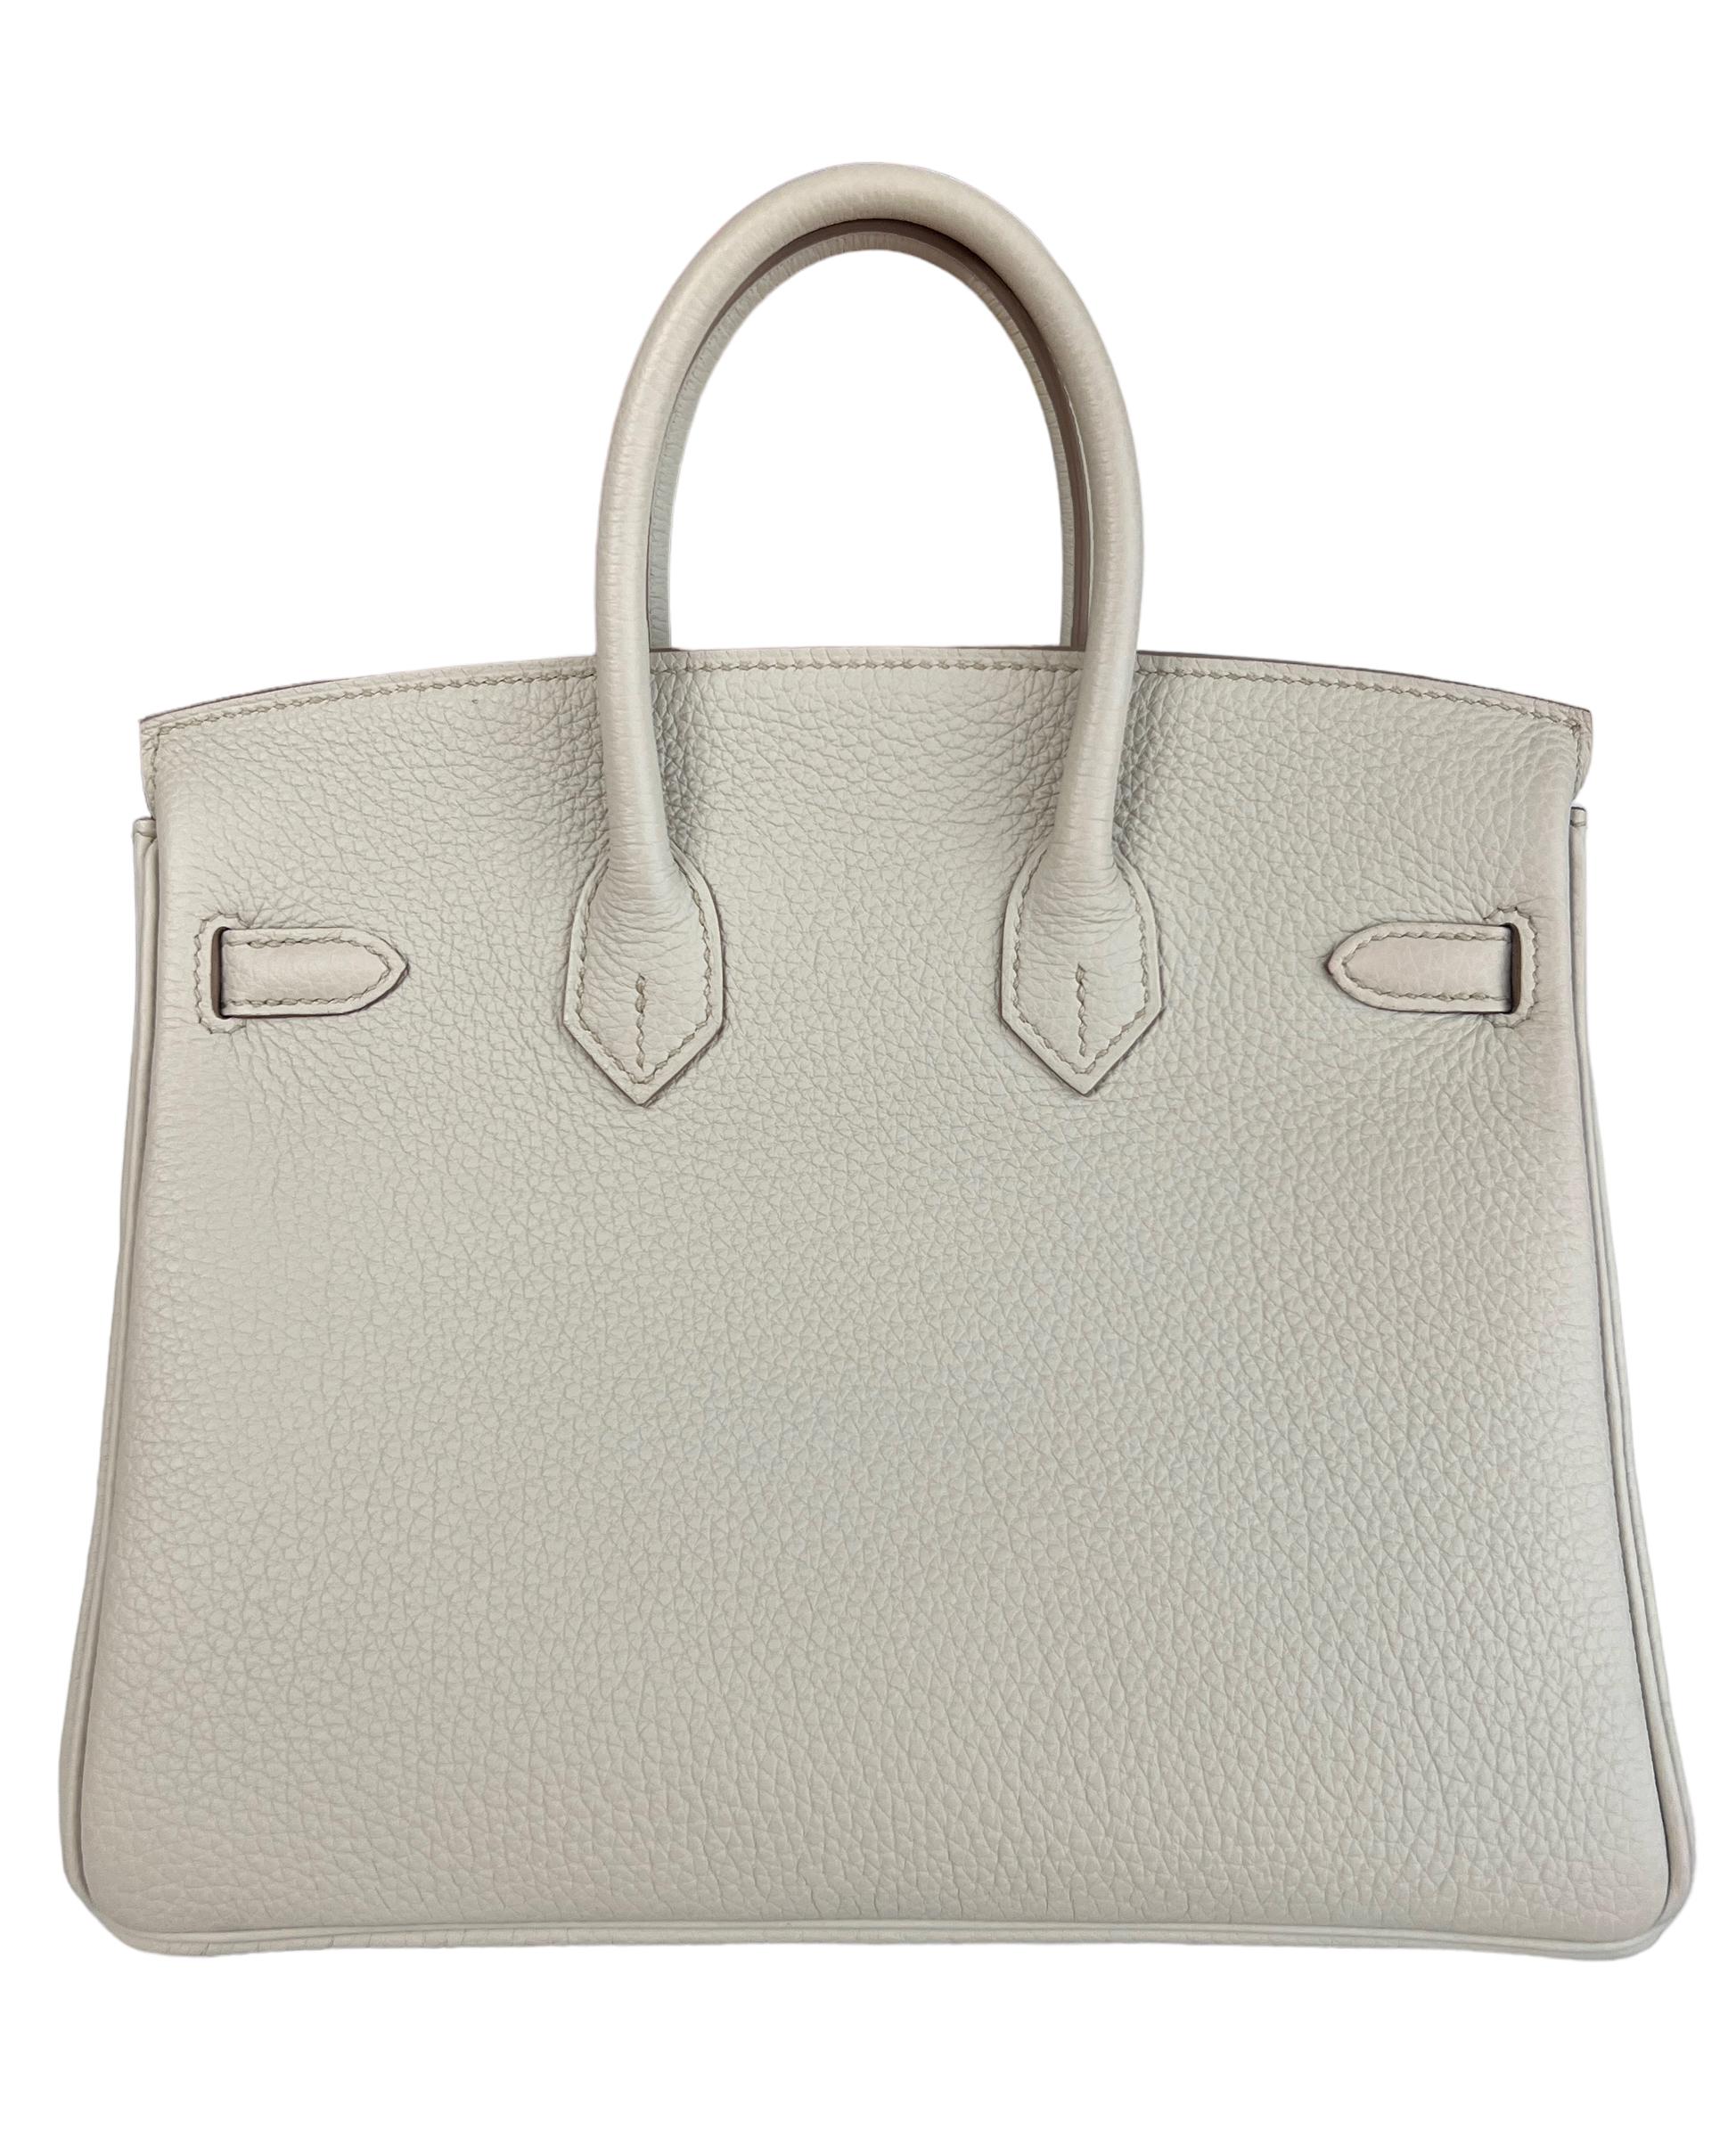 Women's or Men's Hermes Birkin 25 Beton Togo Leather Handbag Bag Palladium Hardware RARE